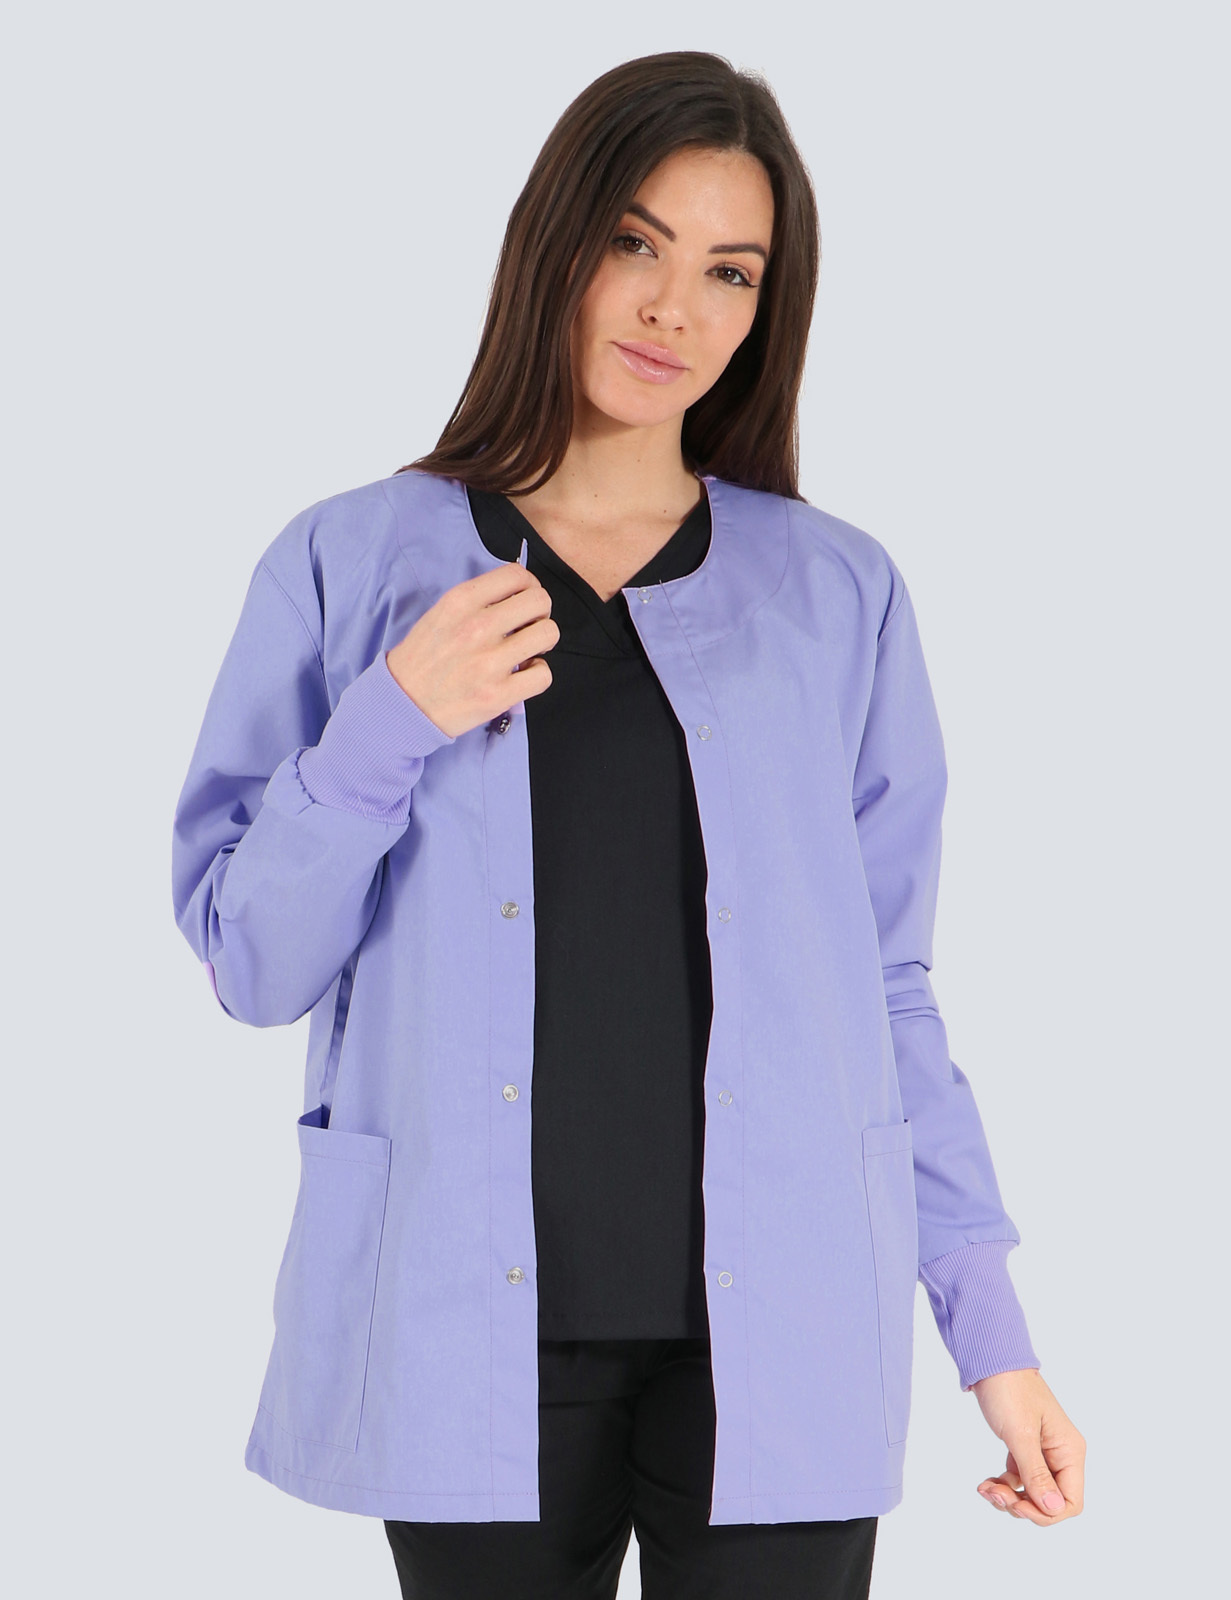 Women's Scrub Jacket - Lilac - 2X Large